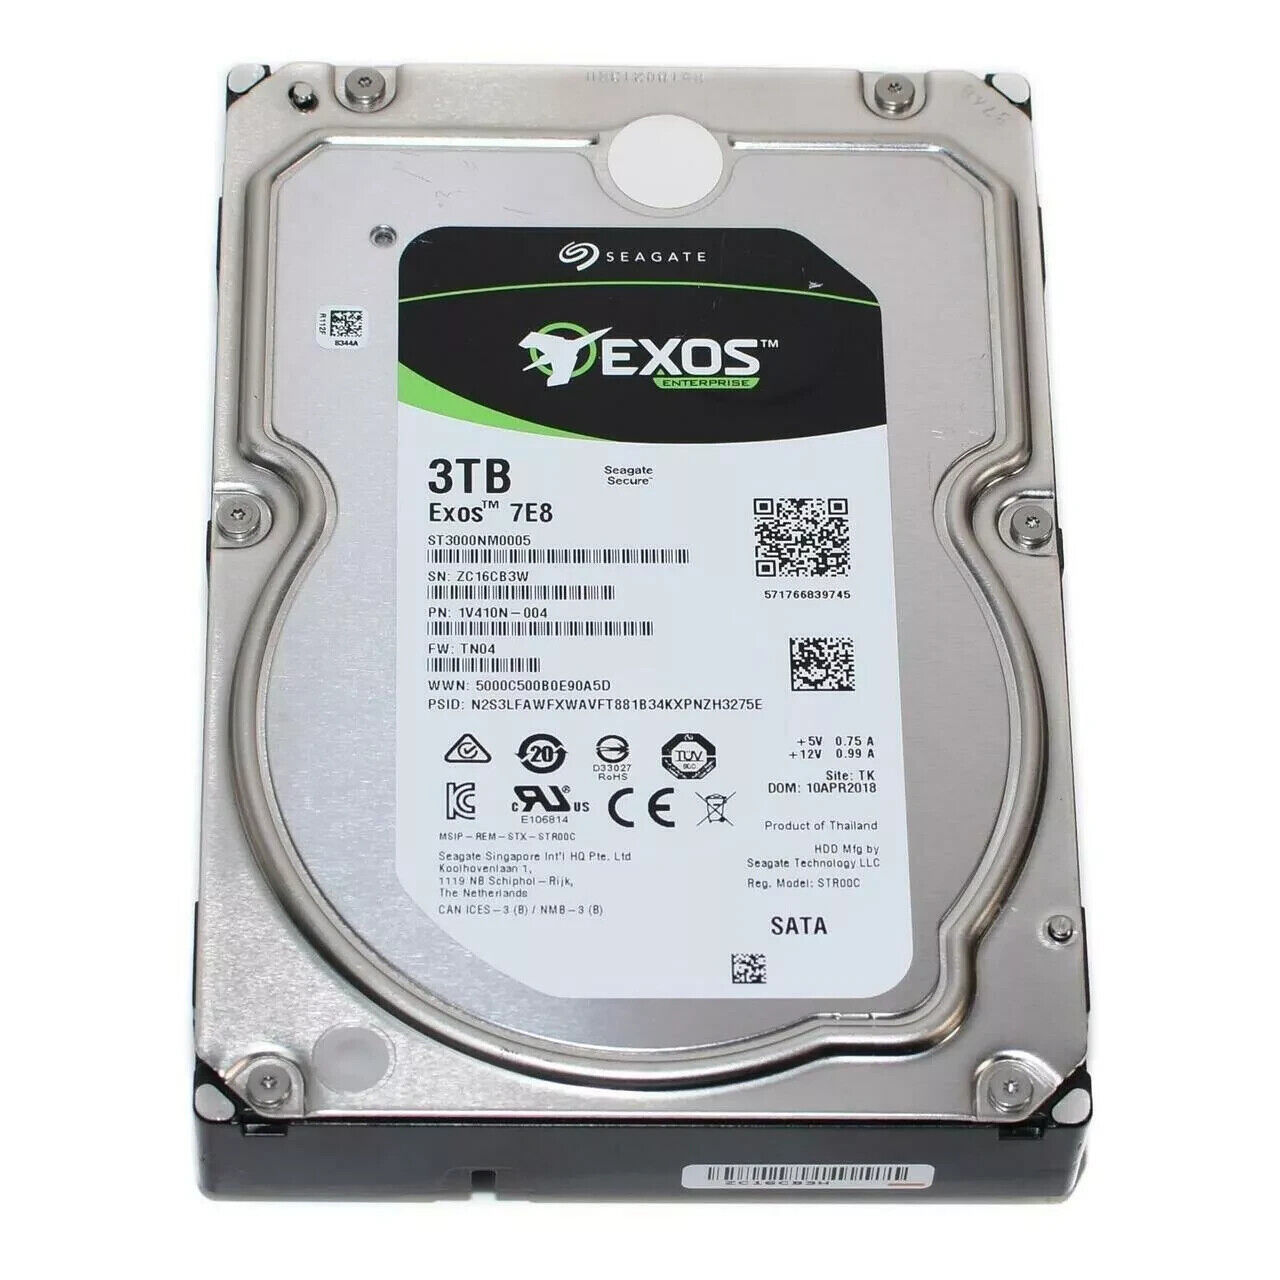 SEAGATE EXOS 7eB 3TB 7200RPM SATA 6.0 GB/s 128 HARD DRIVE ST3000NM0005 HDD